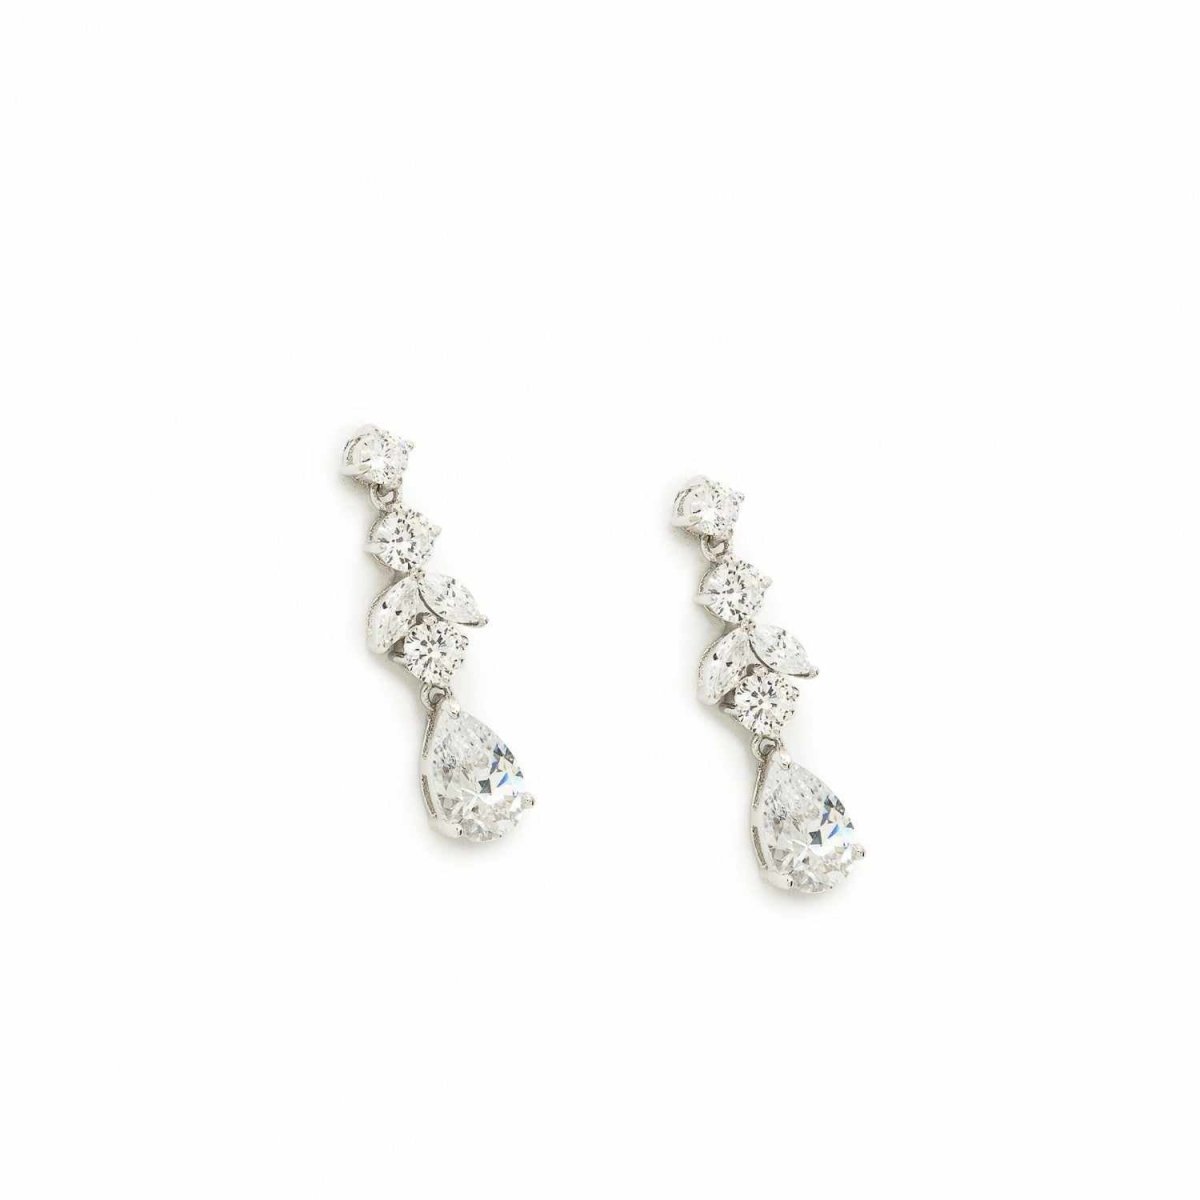 Earrings - Bridal earrings silver and zircons floral design